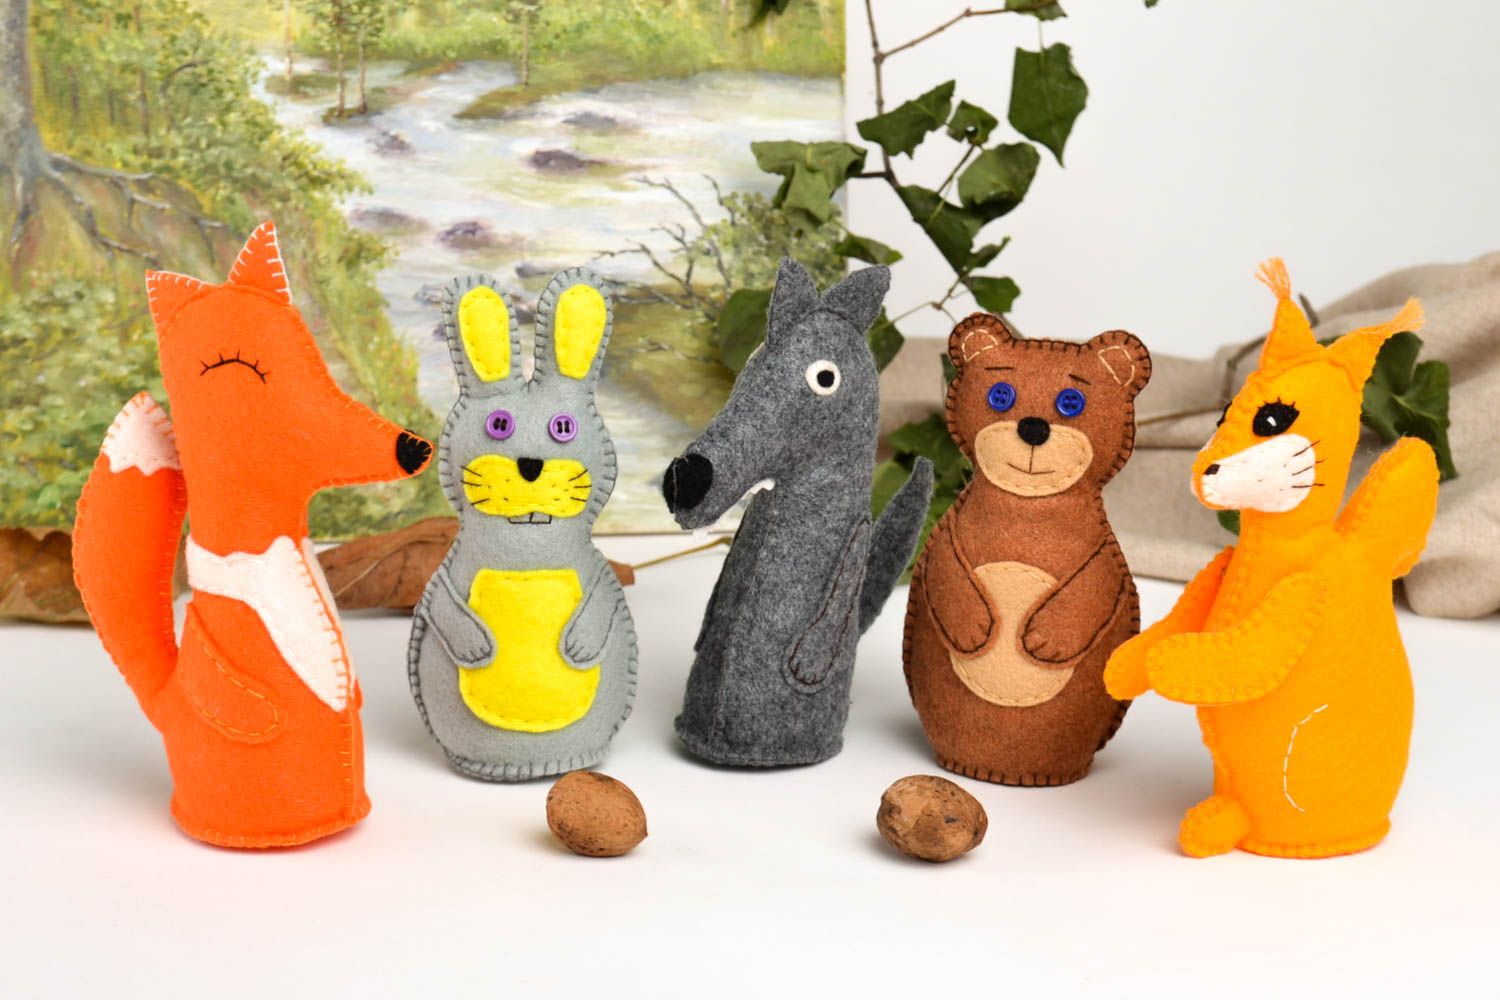 Handmade soft toys 5 animal toys stuffed animals gifts for babies nursery decor photo 1